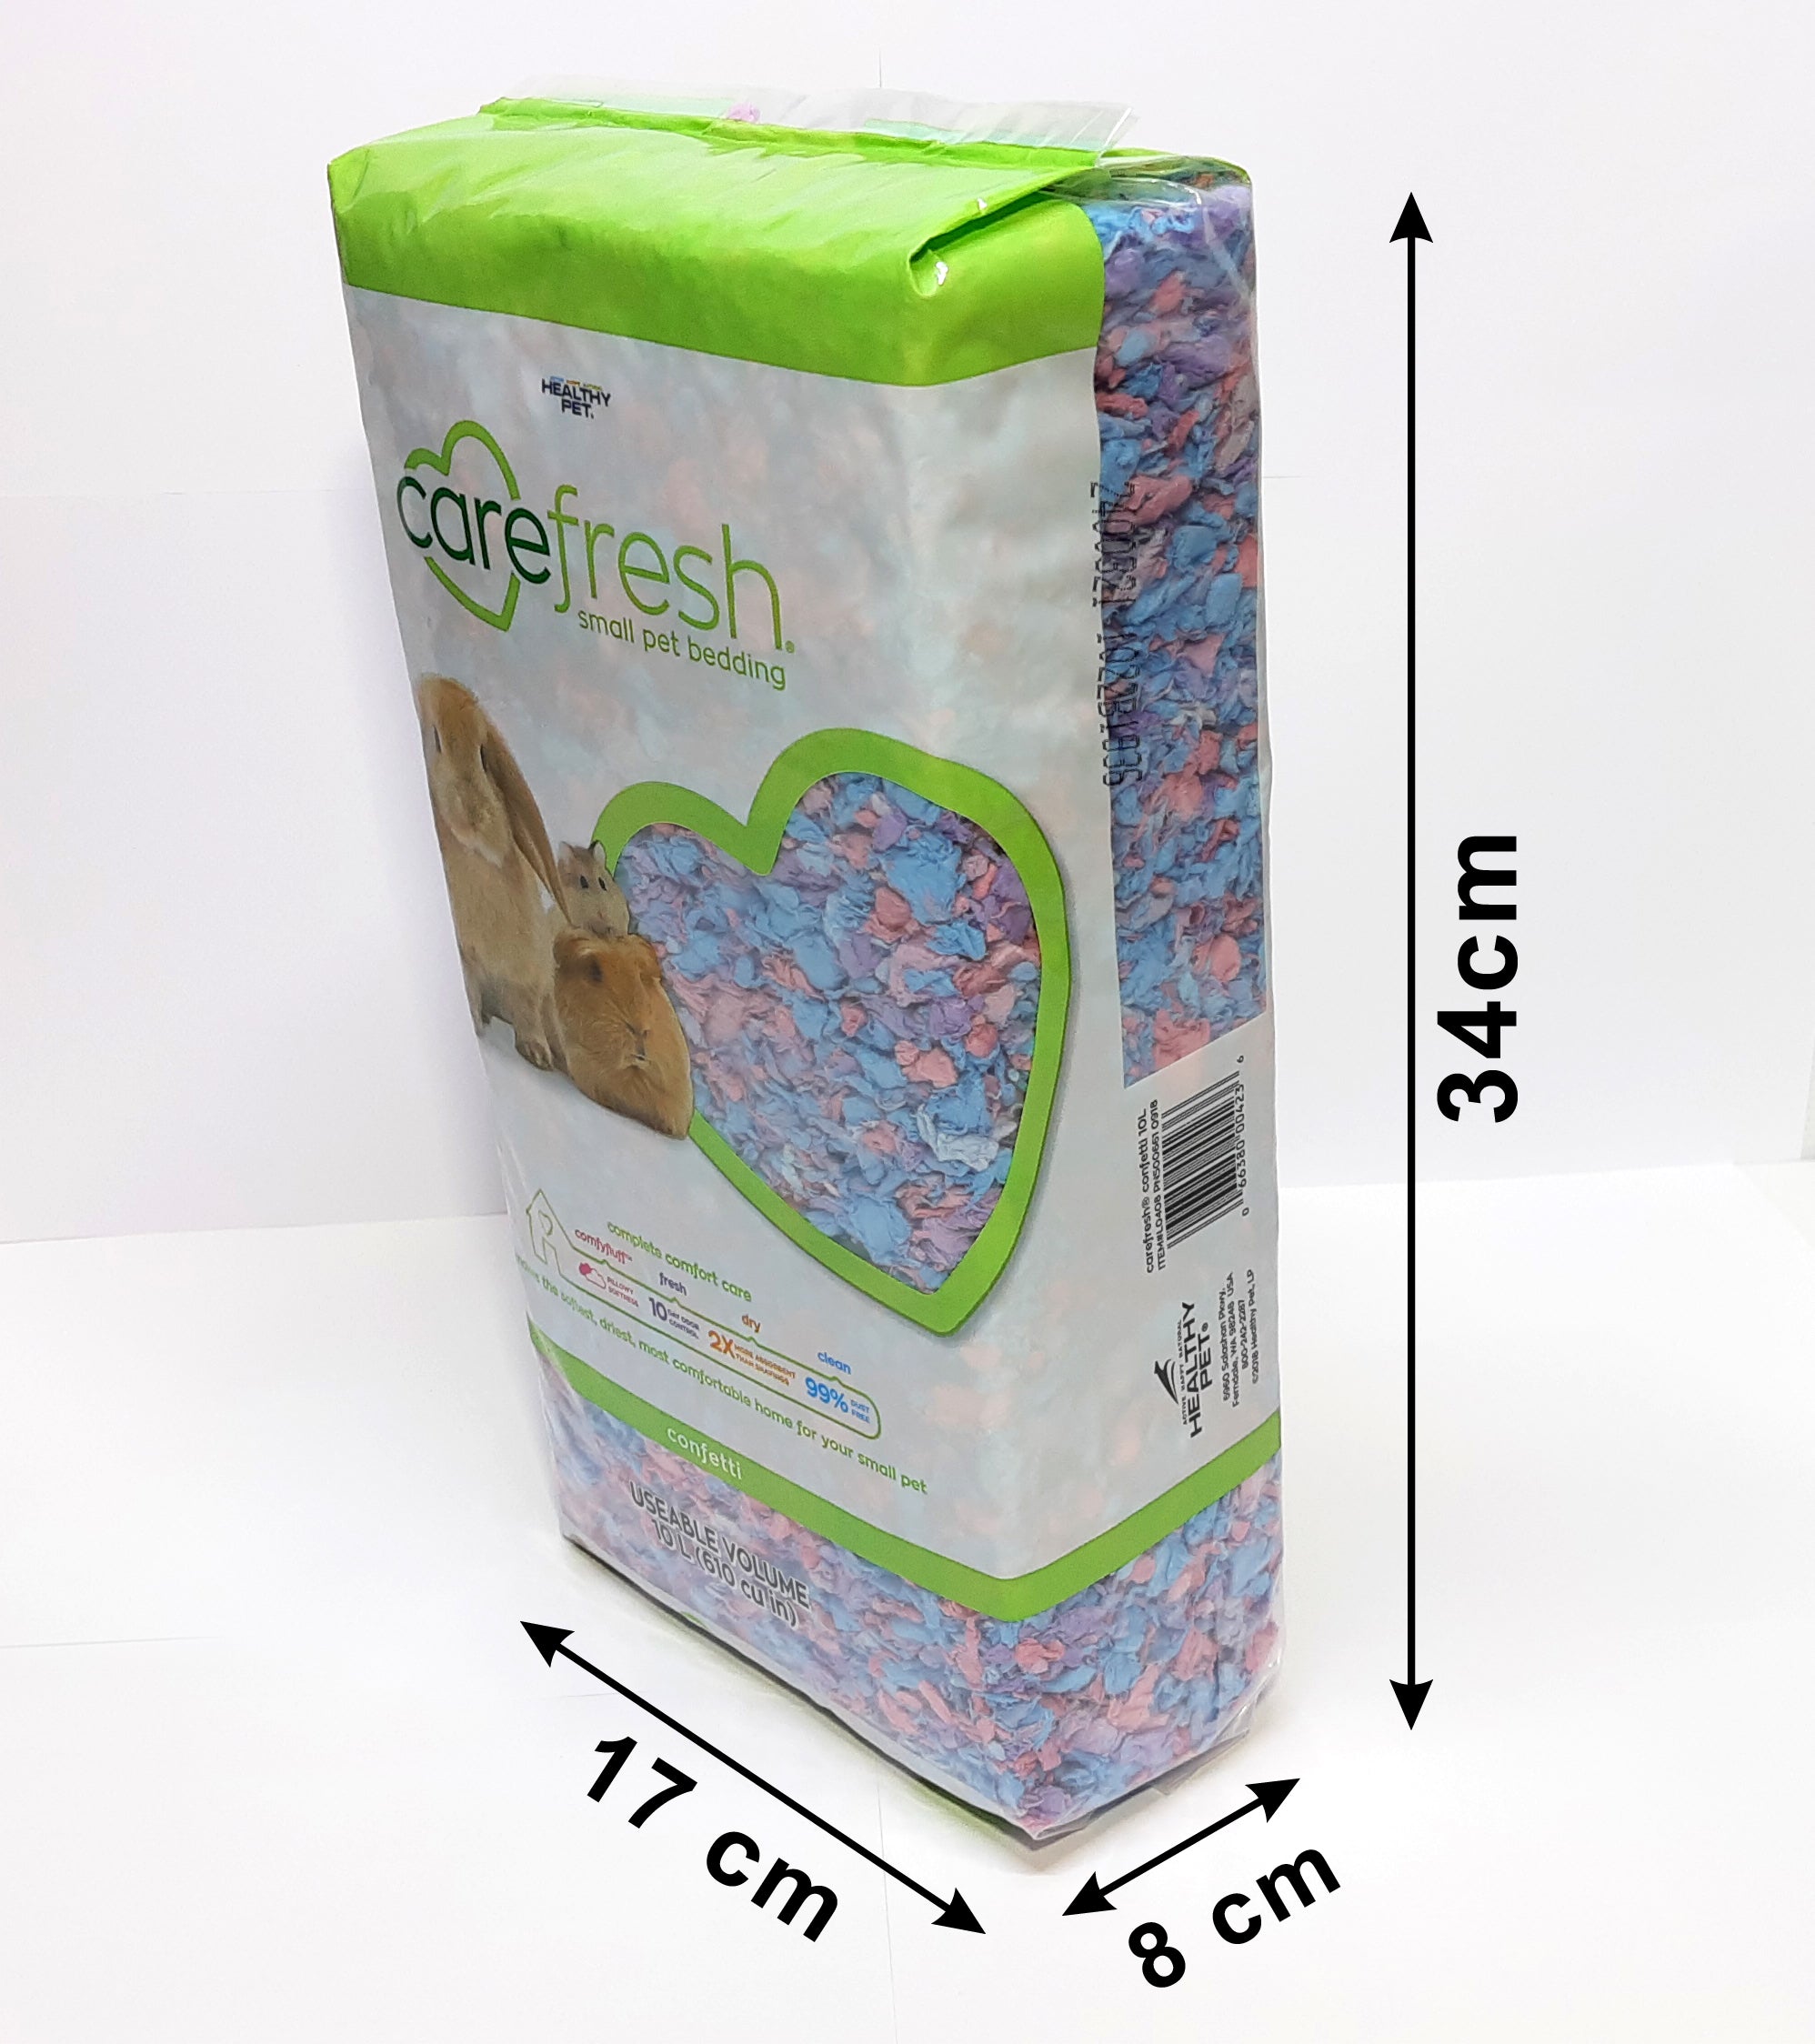 Carefresh Confetti Substrate 10 Lt (750 gr)